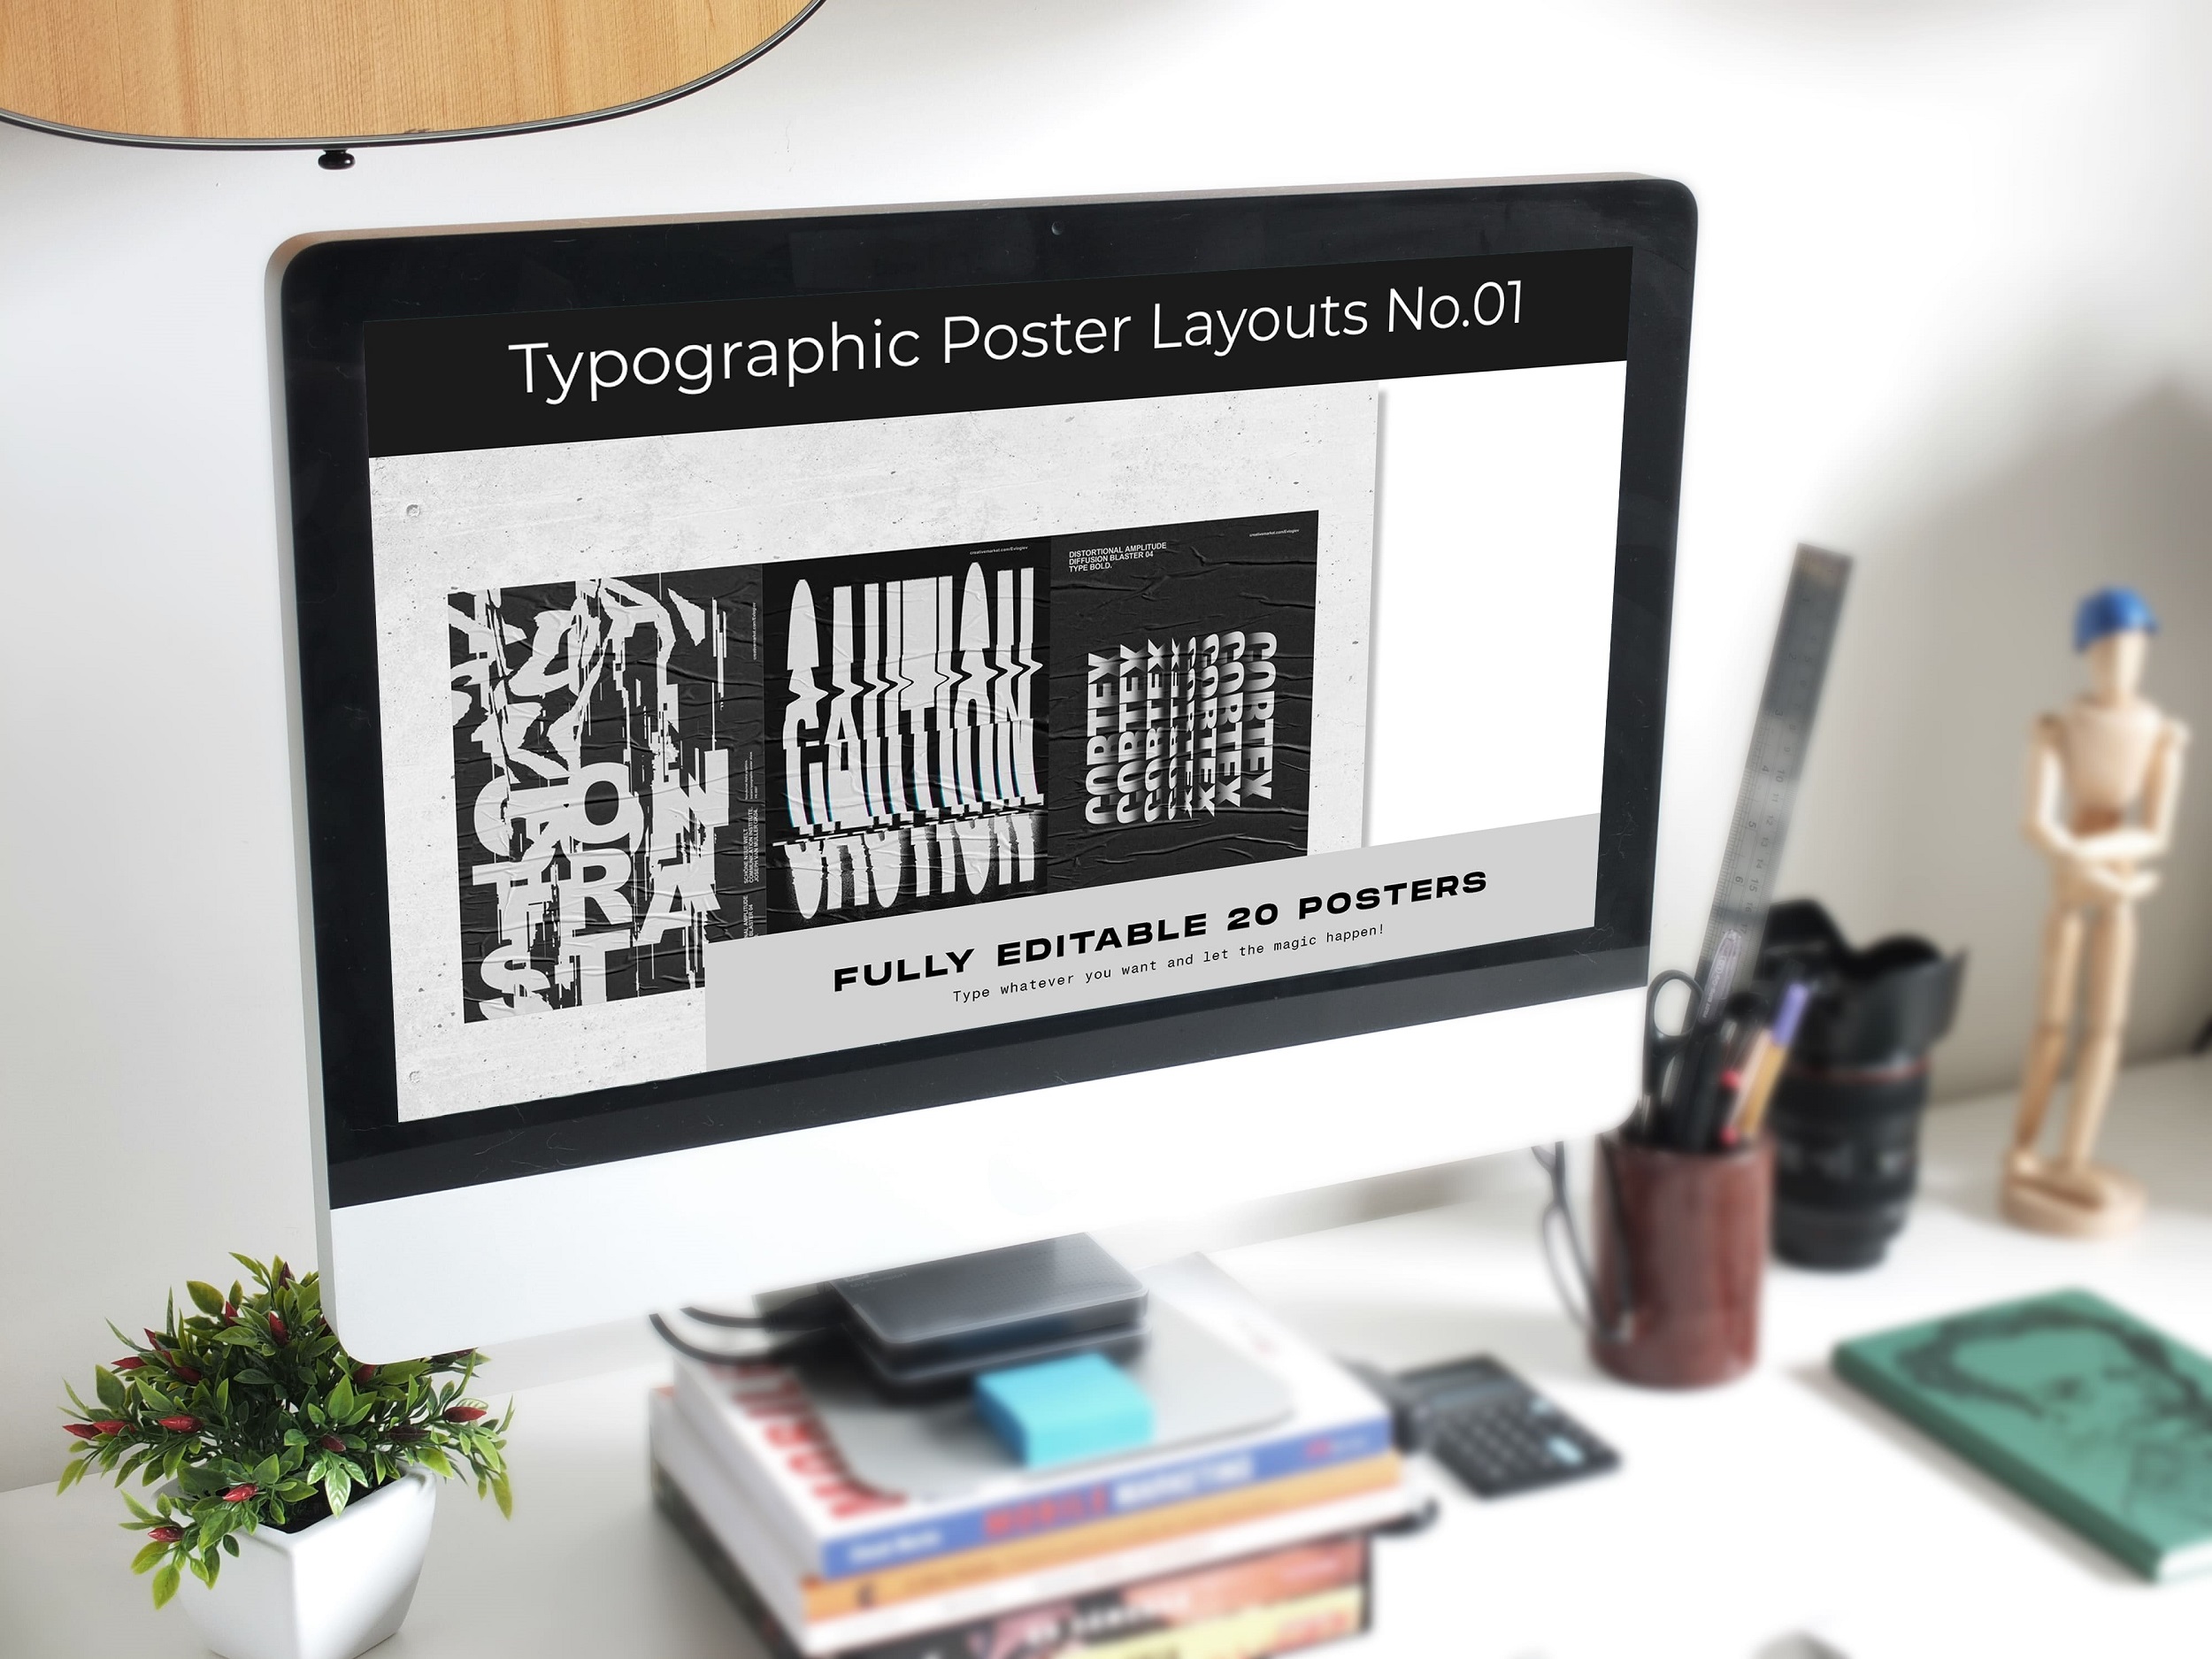 Typographic Poster Layouts No.01 desktop mockup.